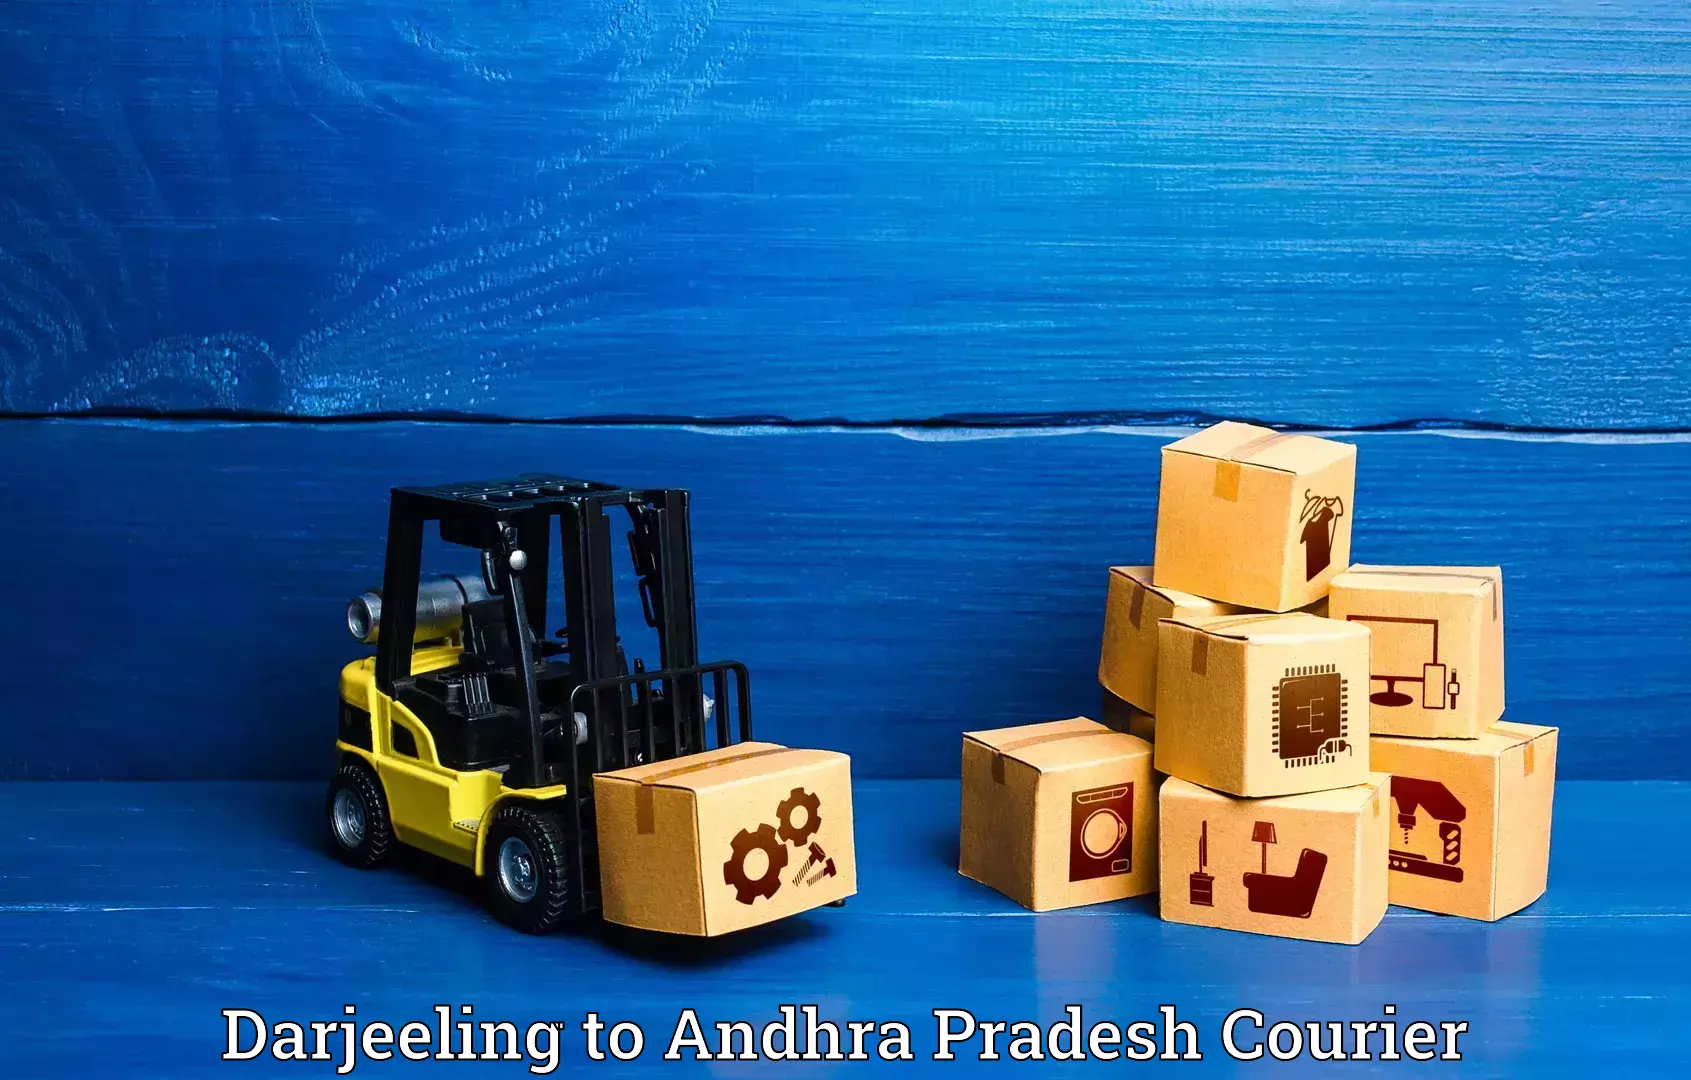 Instant baggage transport quote Darjeeling to Andhra Pradesh